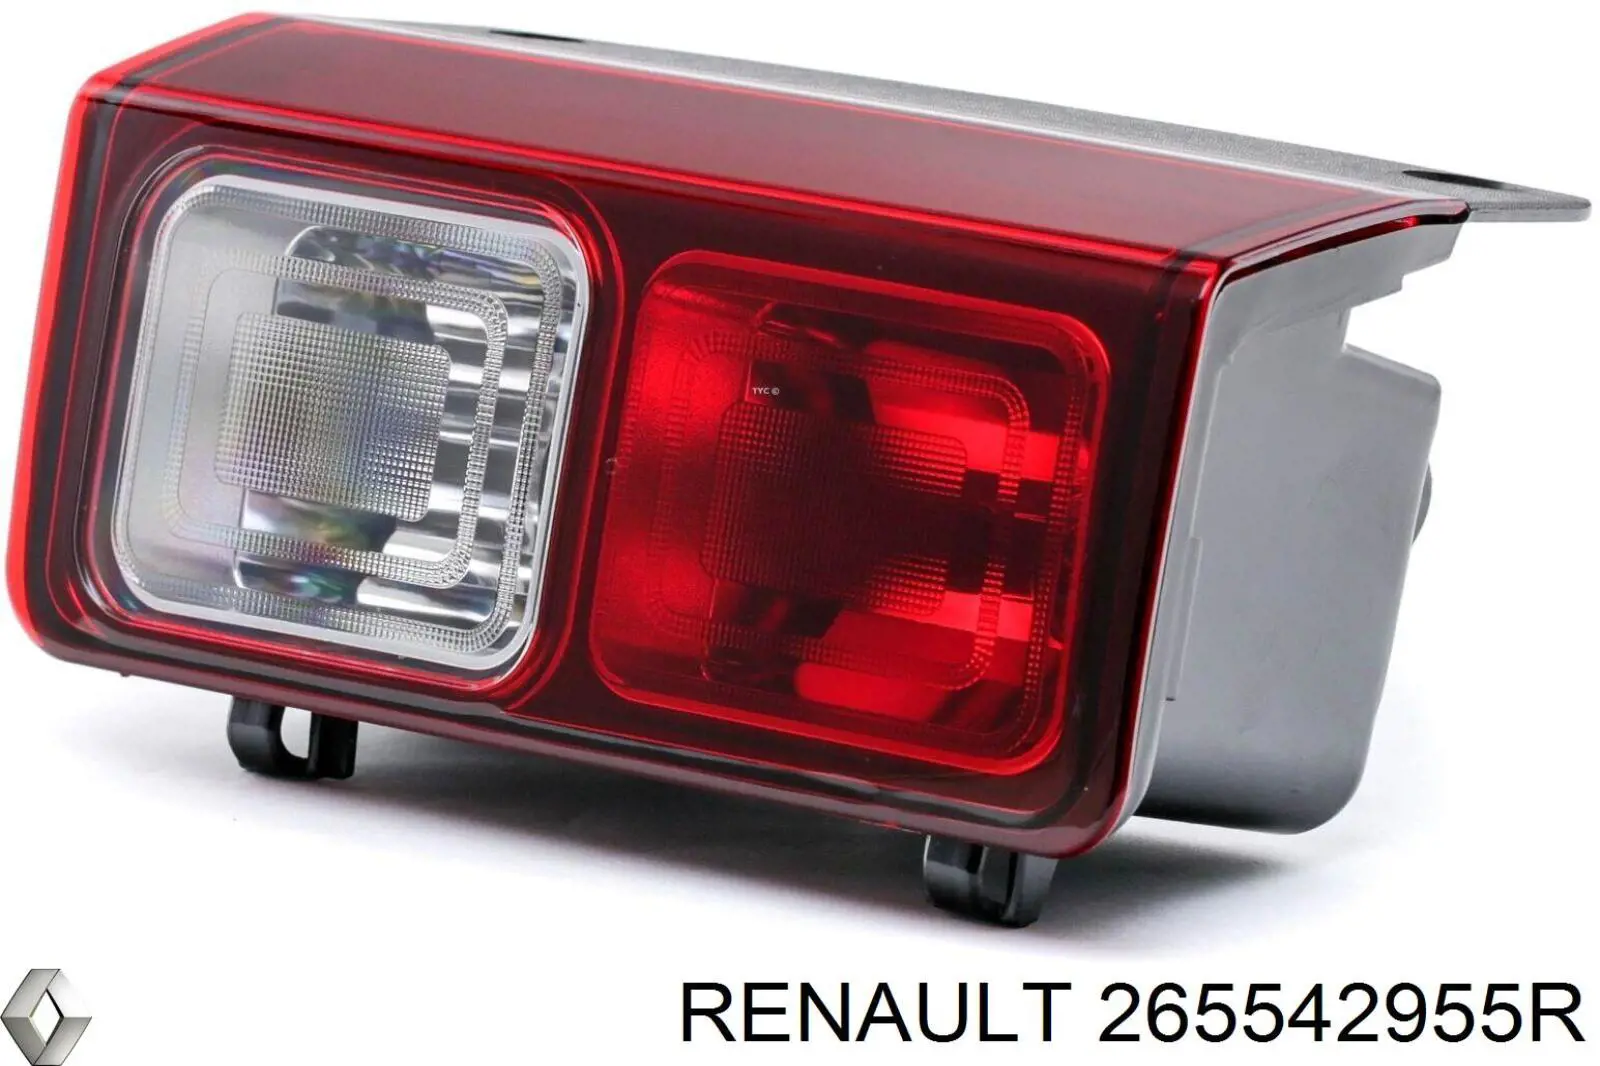 265542955R Renault (RVI) lanterna direita de marcha à ré